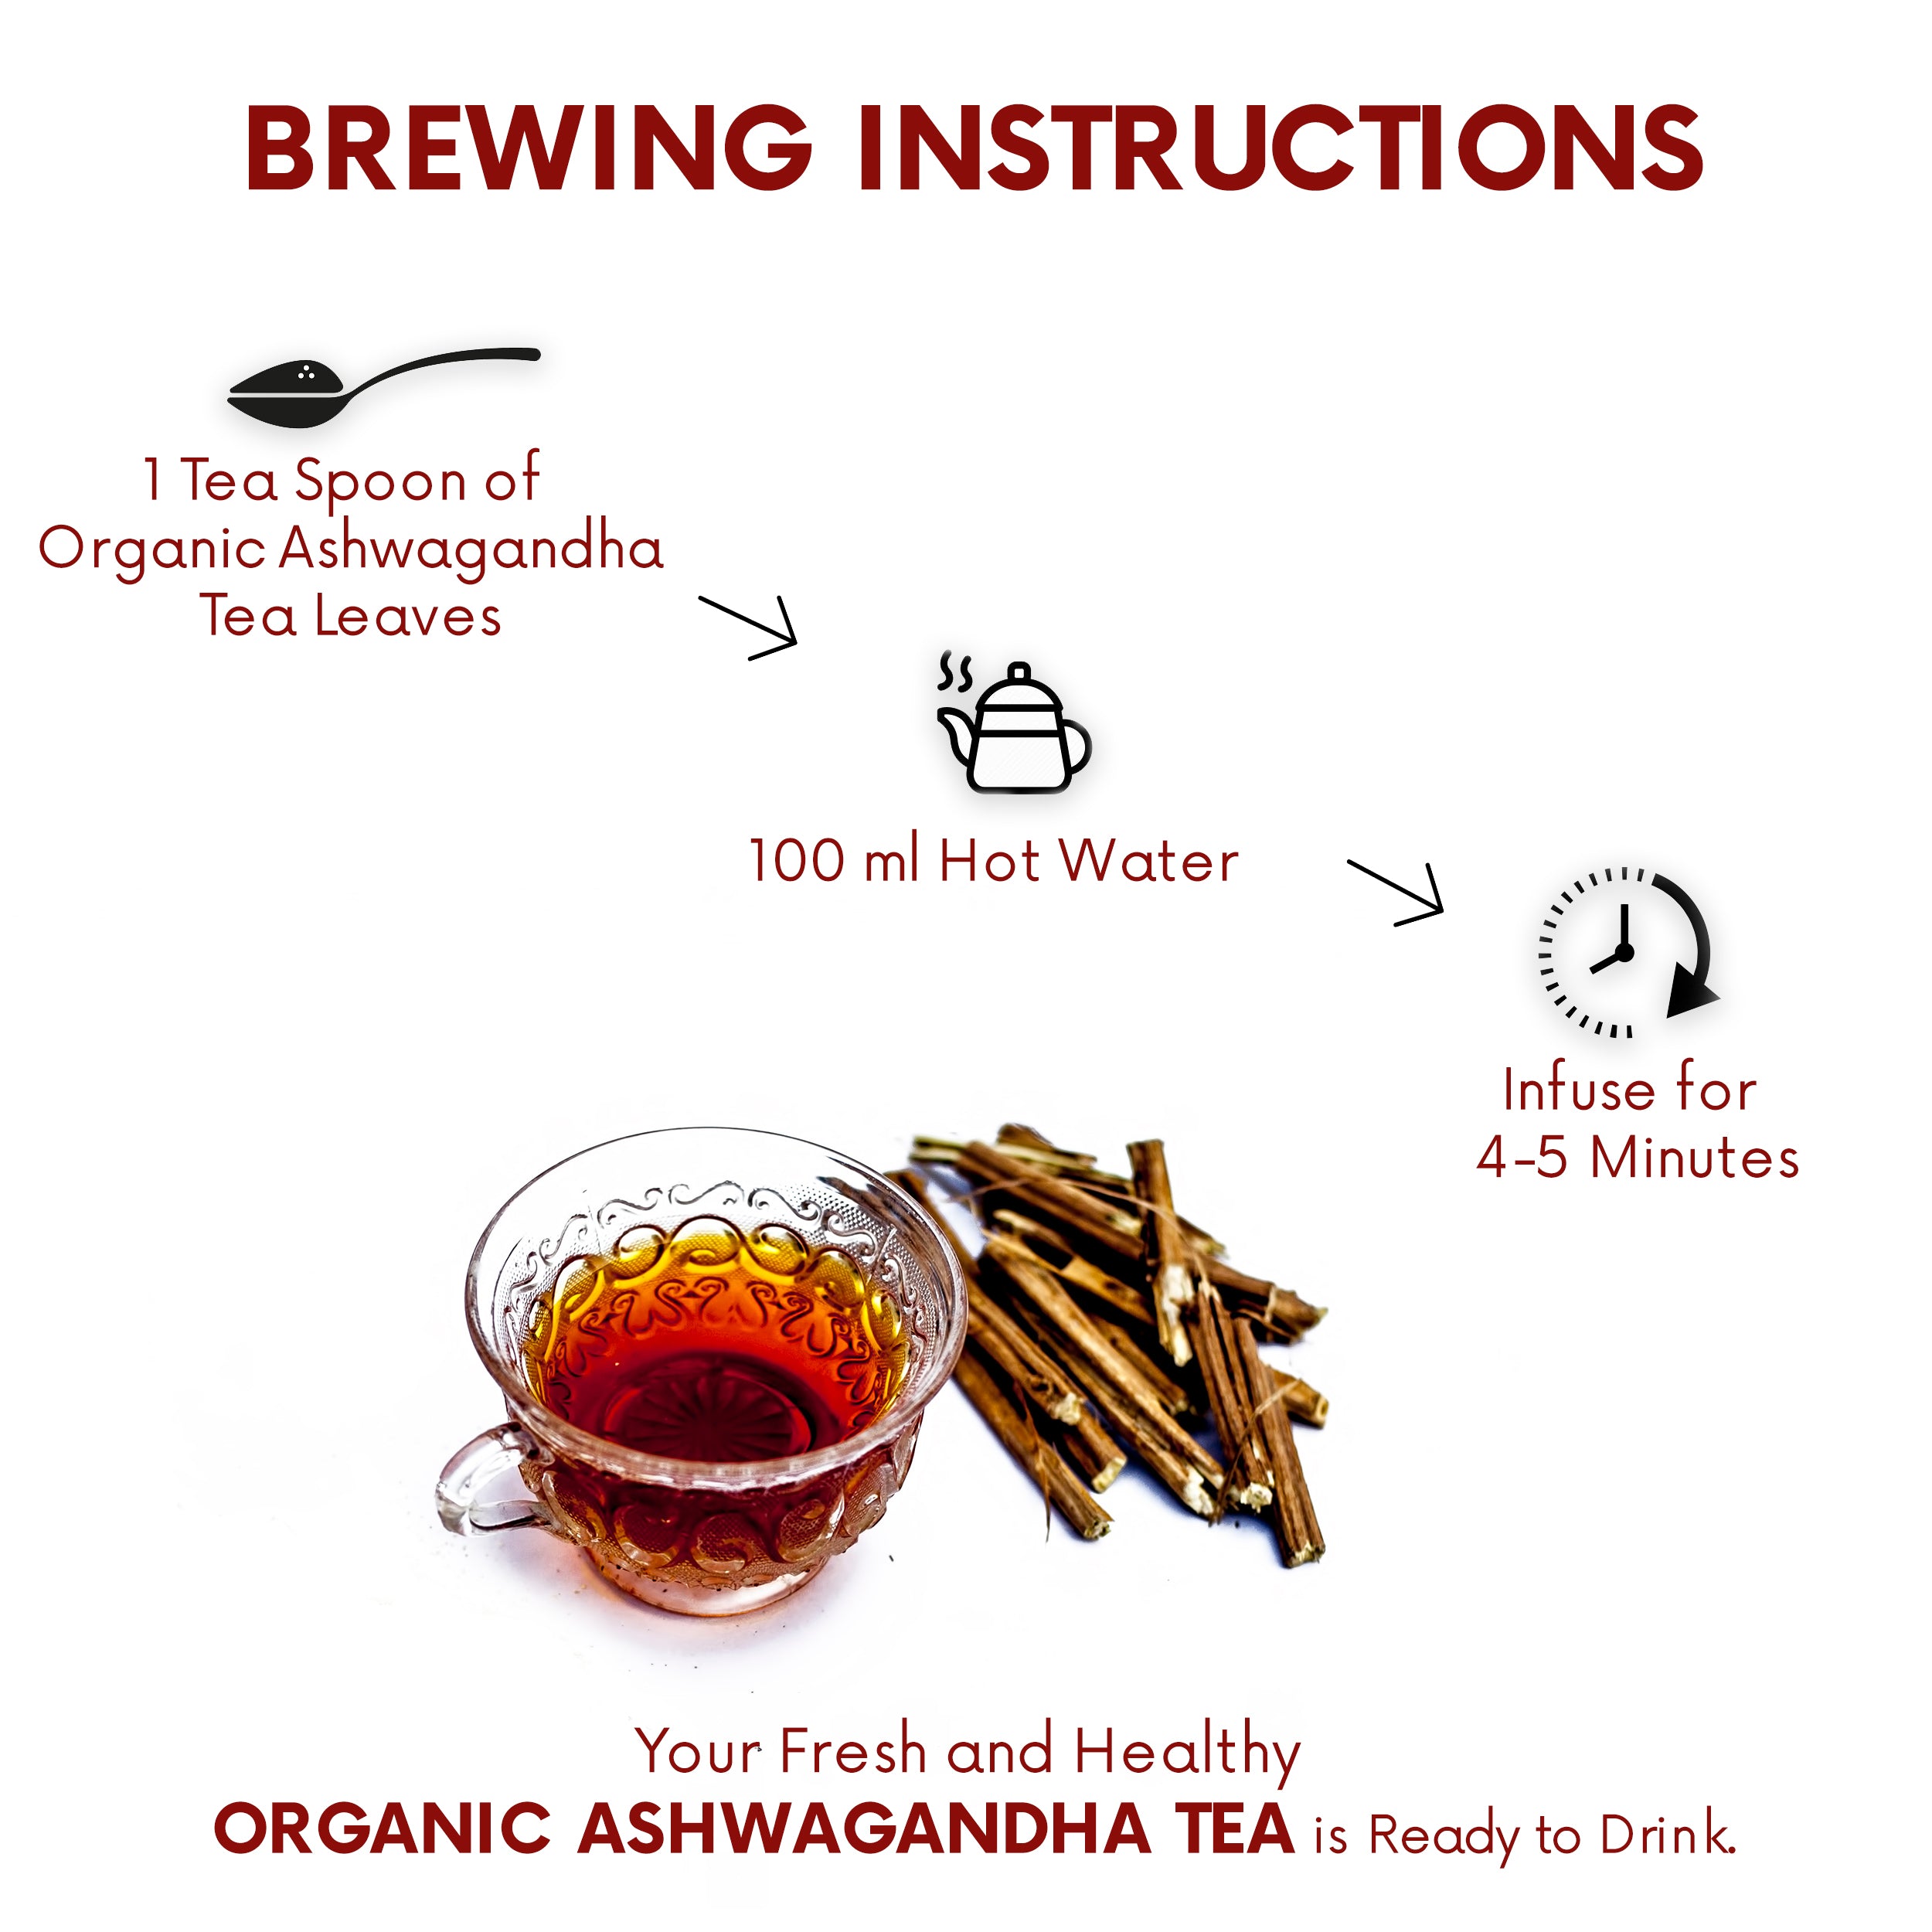 The Tea Ark Ashwagandha, Turmeric Tea, Immunity Booster, Body Detox